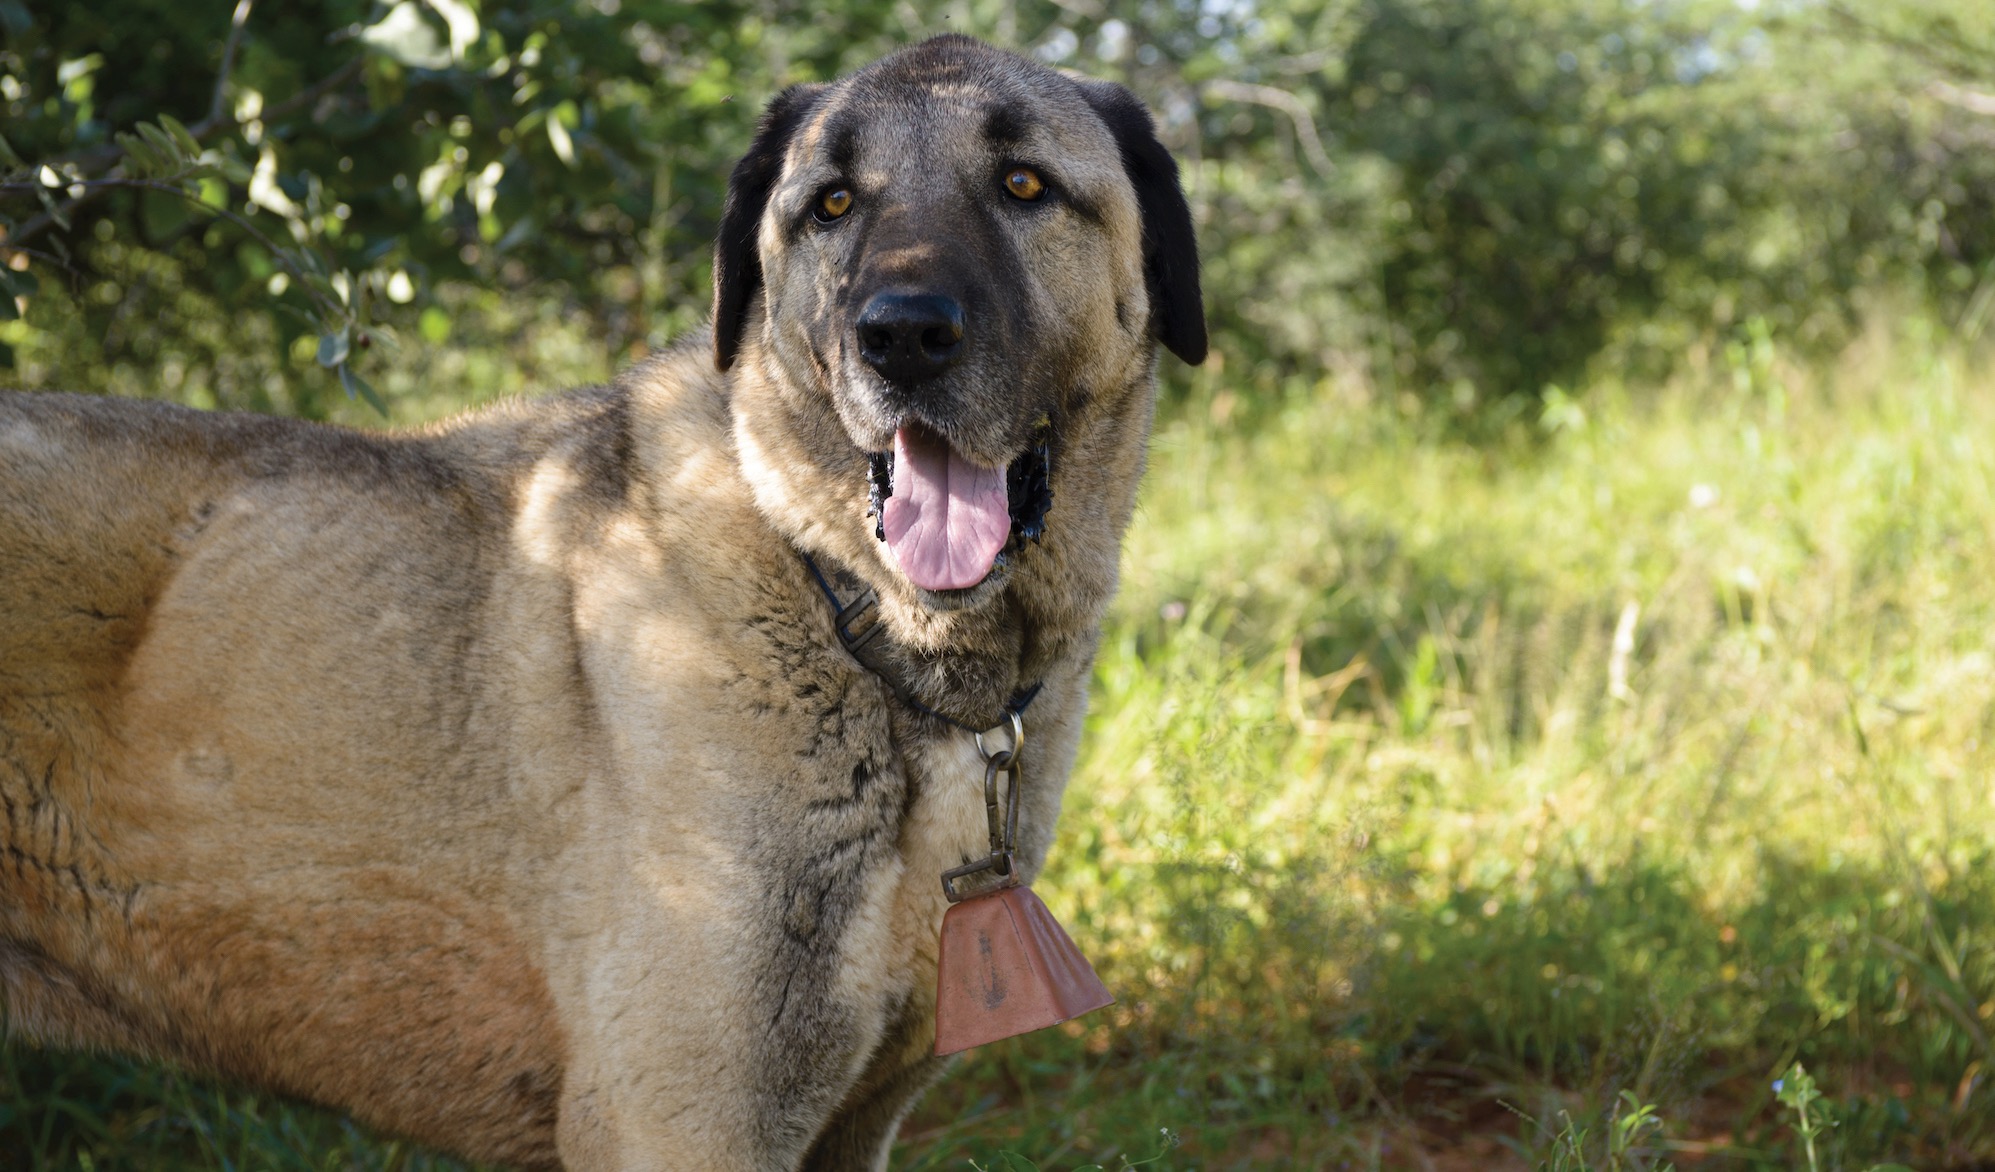 Anatolian guarding dog in the Namibian bush.